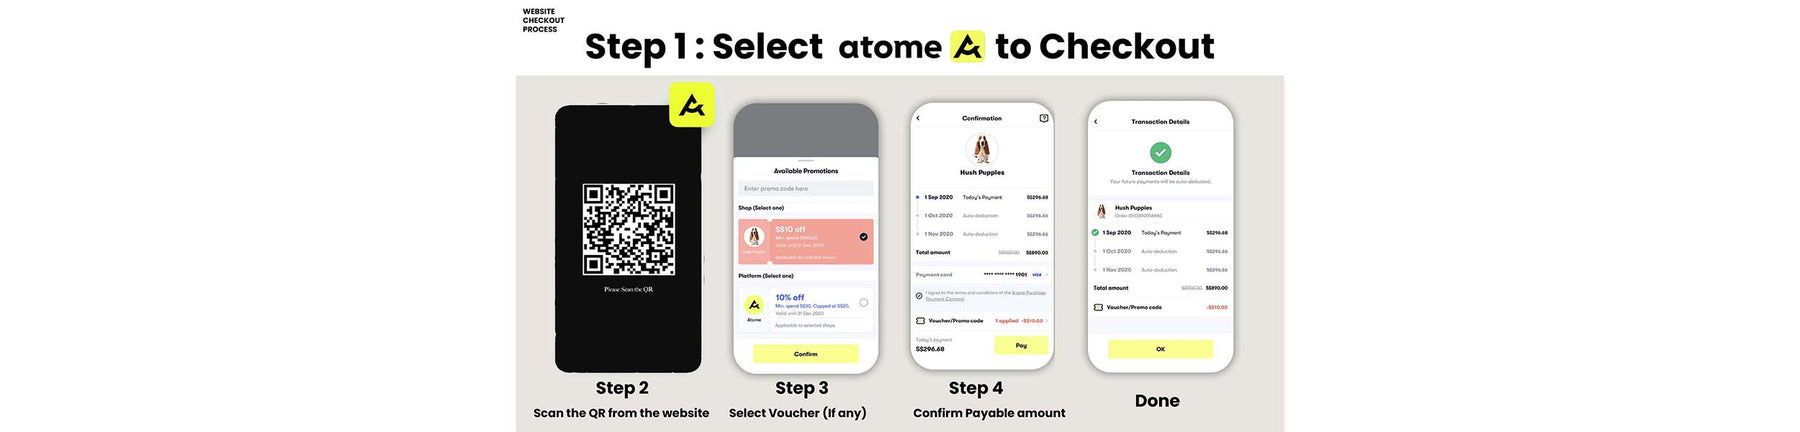 Atome checkout process